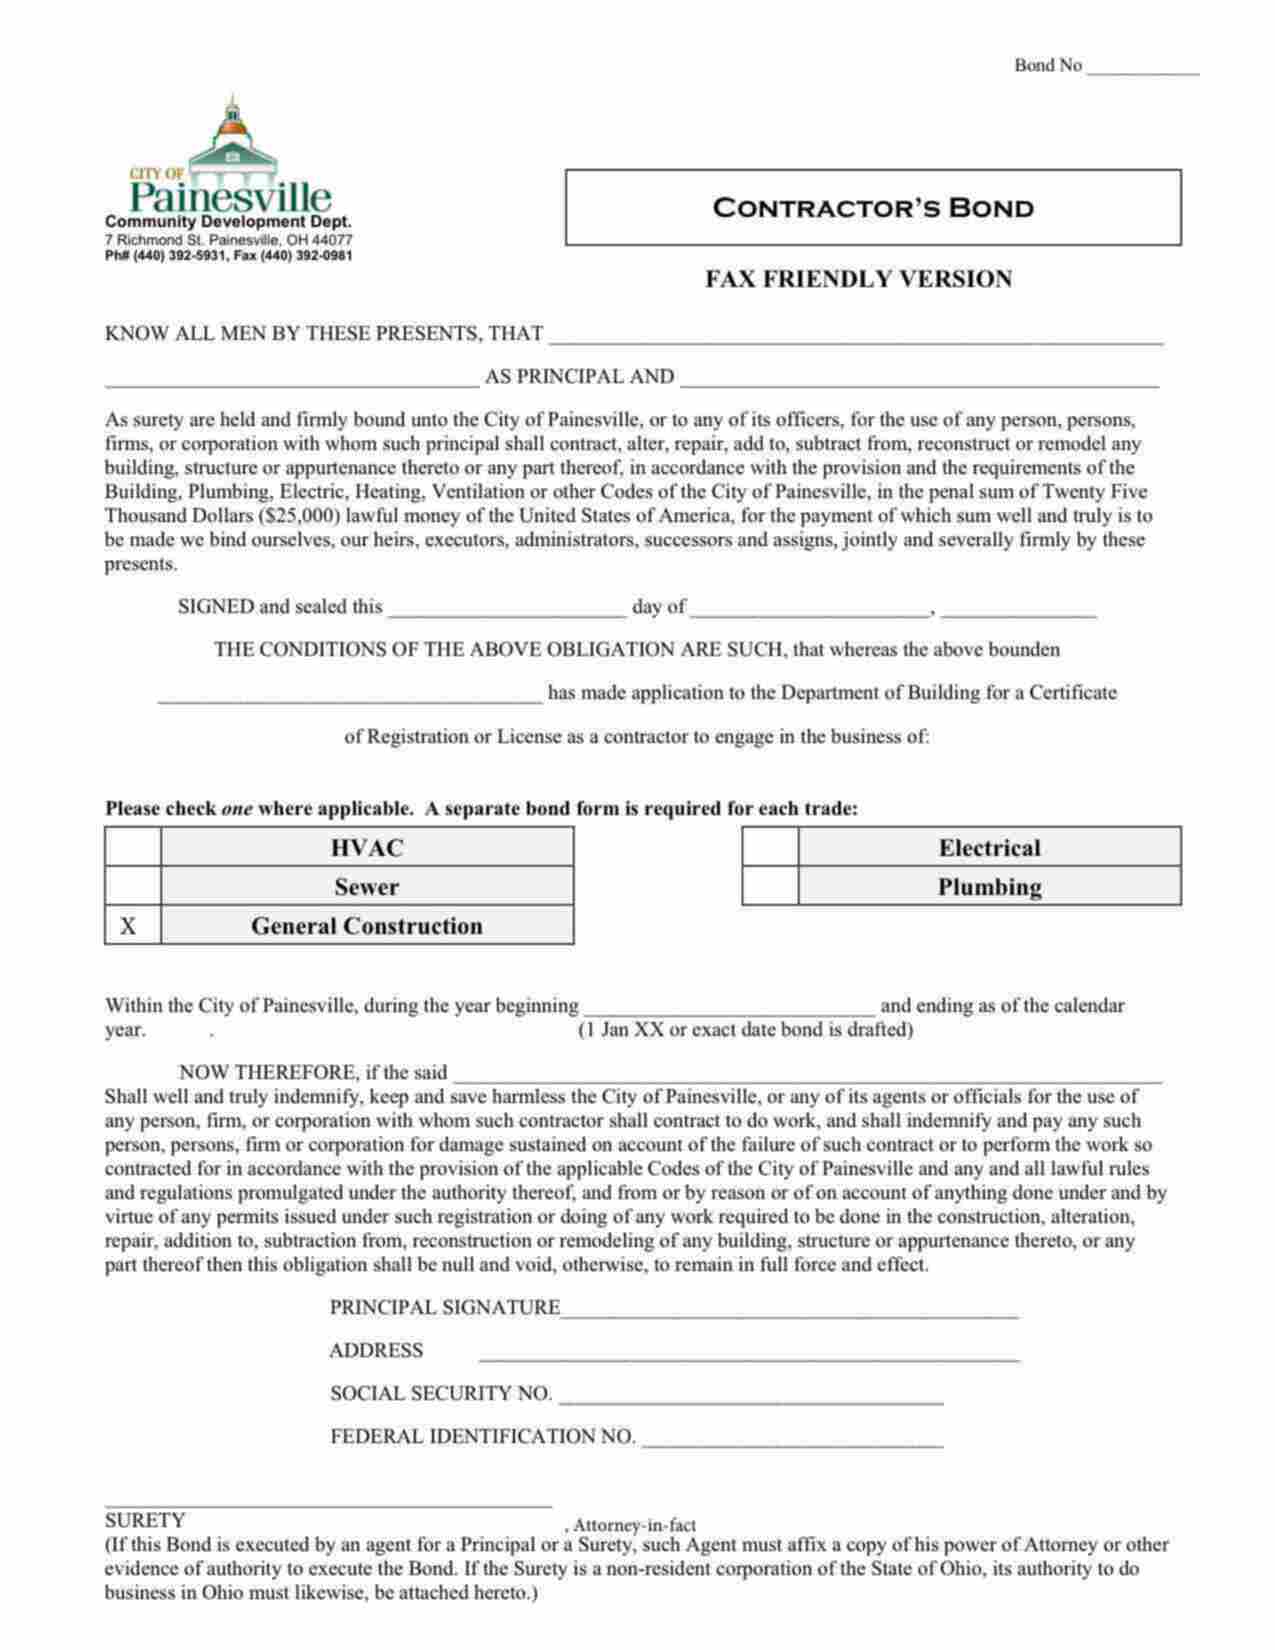 Ohio General Construction Bond Form